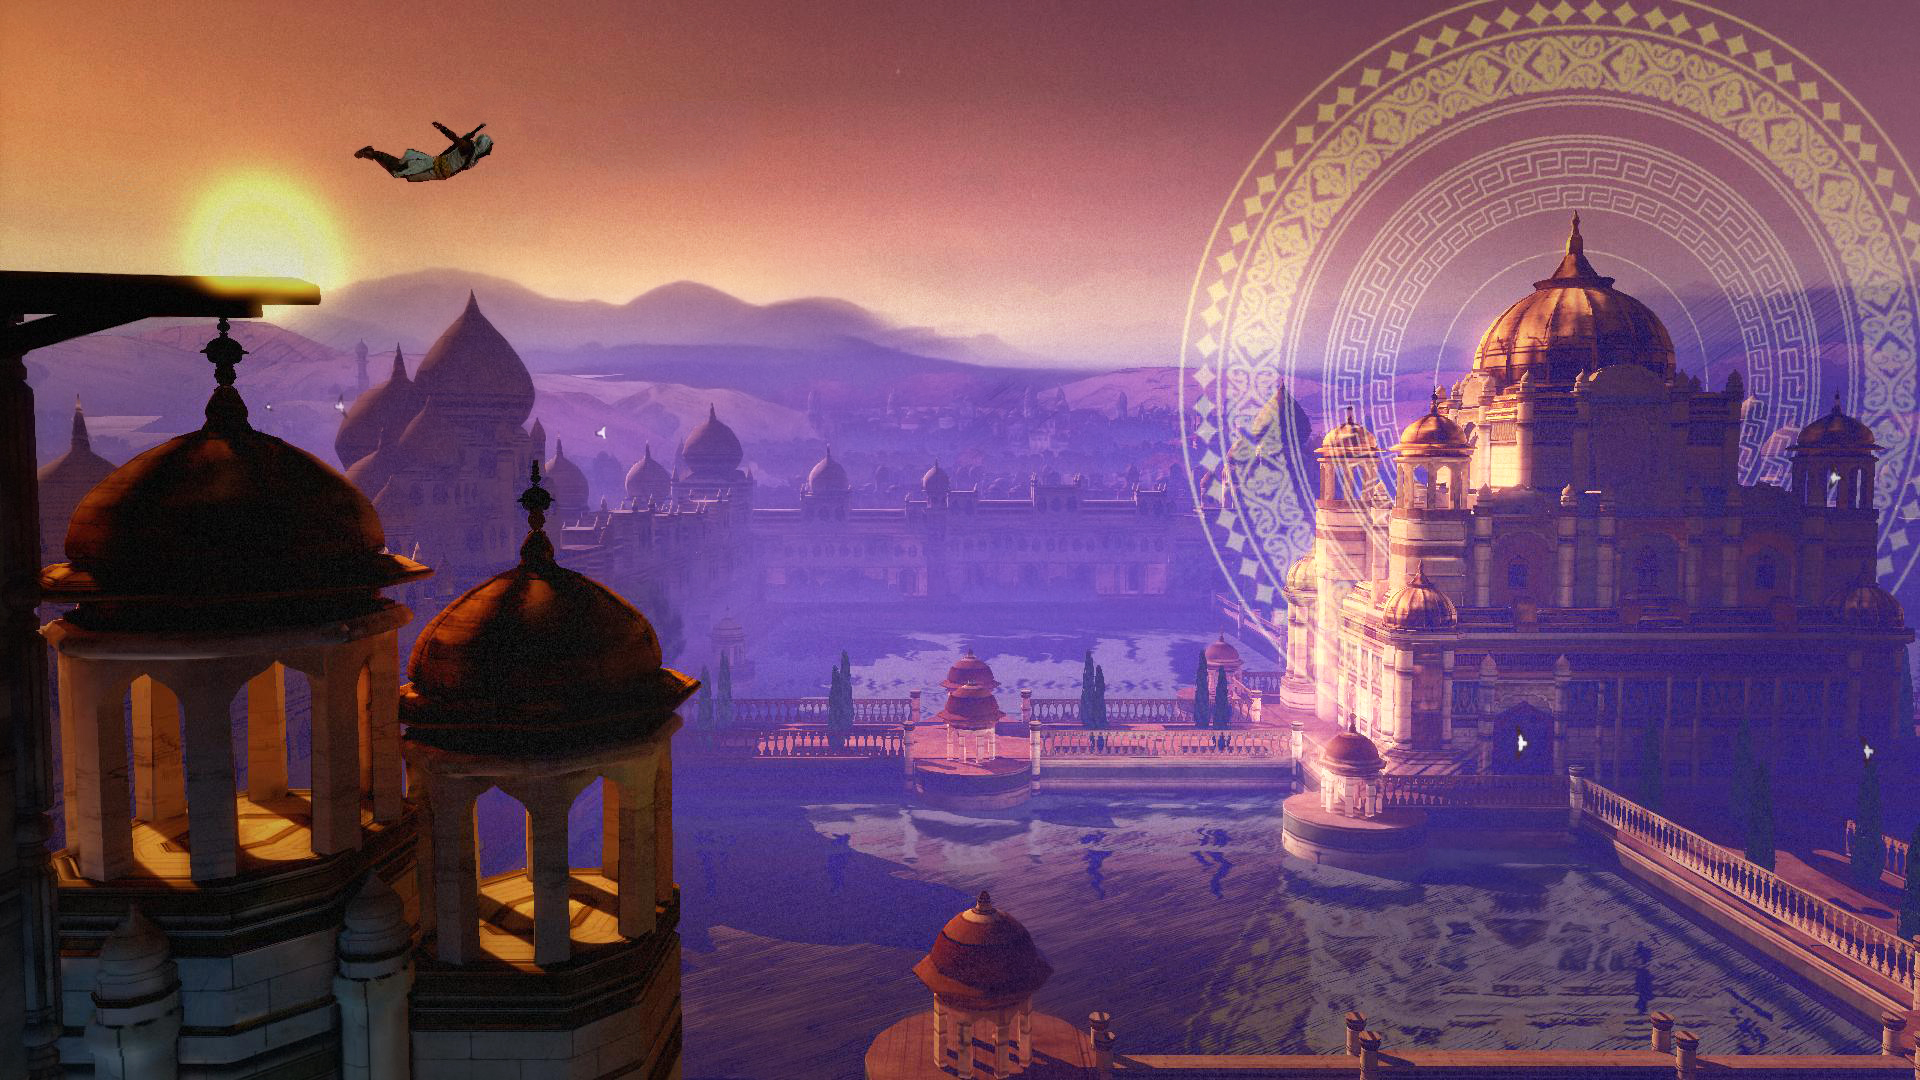 刺客信条编年史：印度/Assassin’s Creed Chronicles: India